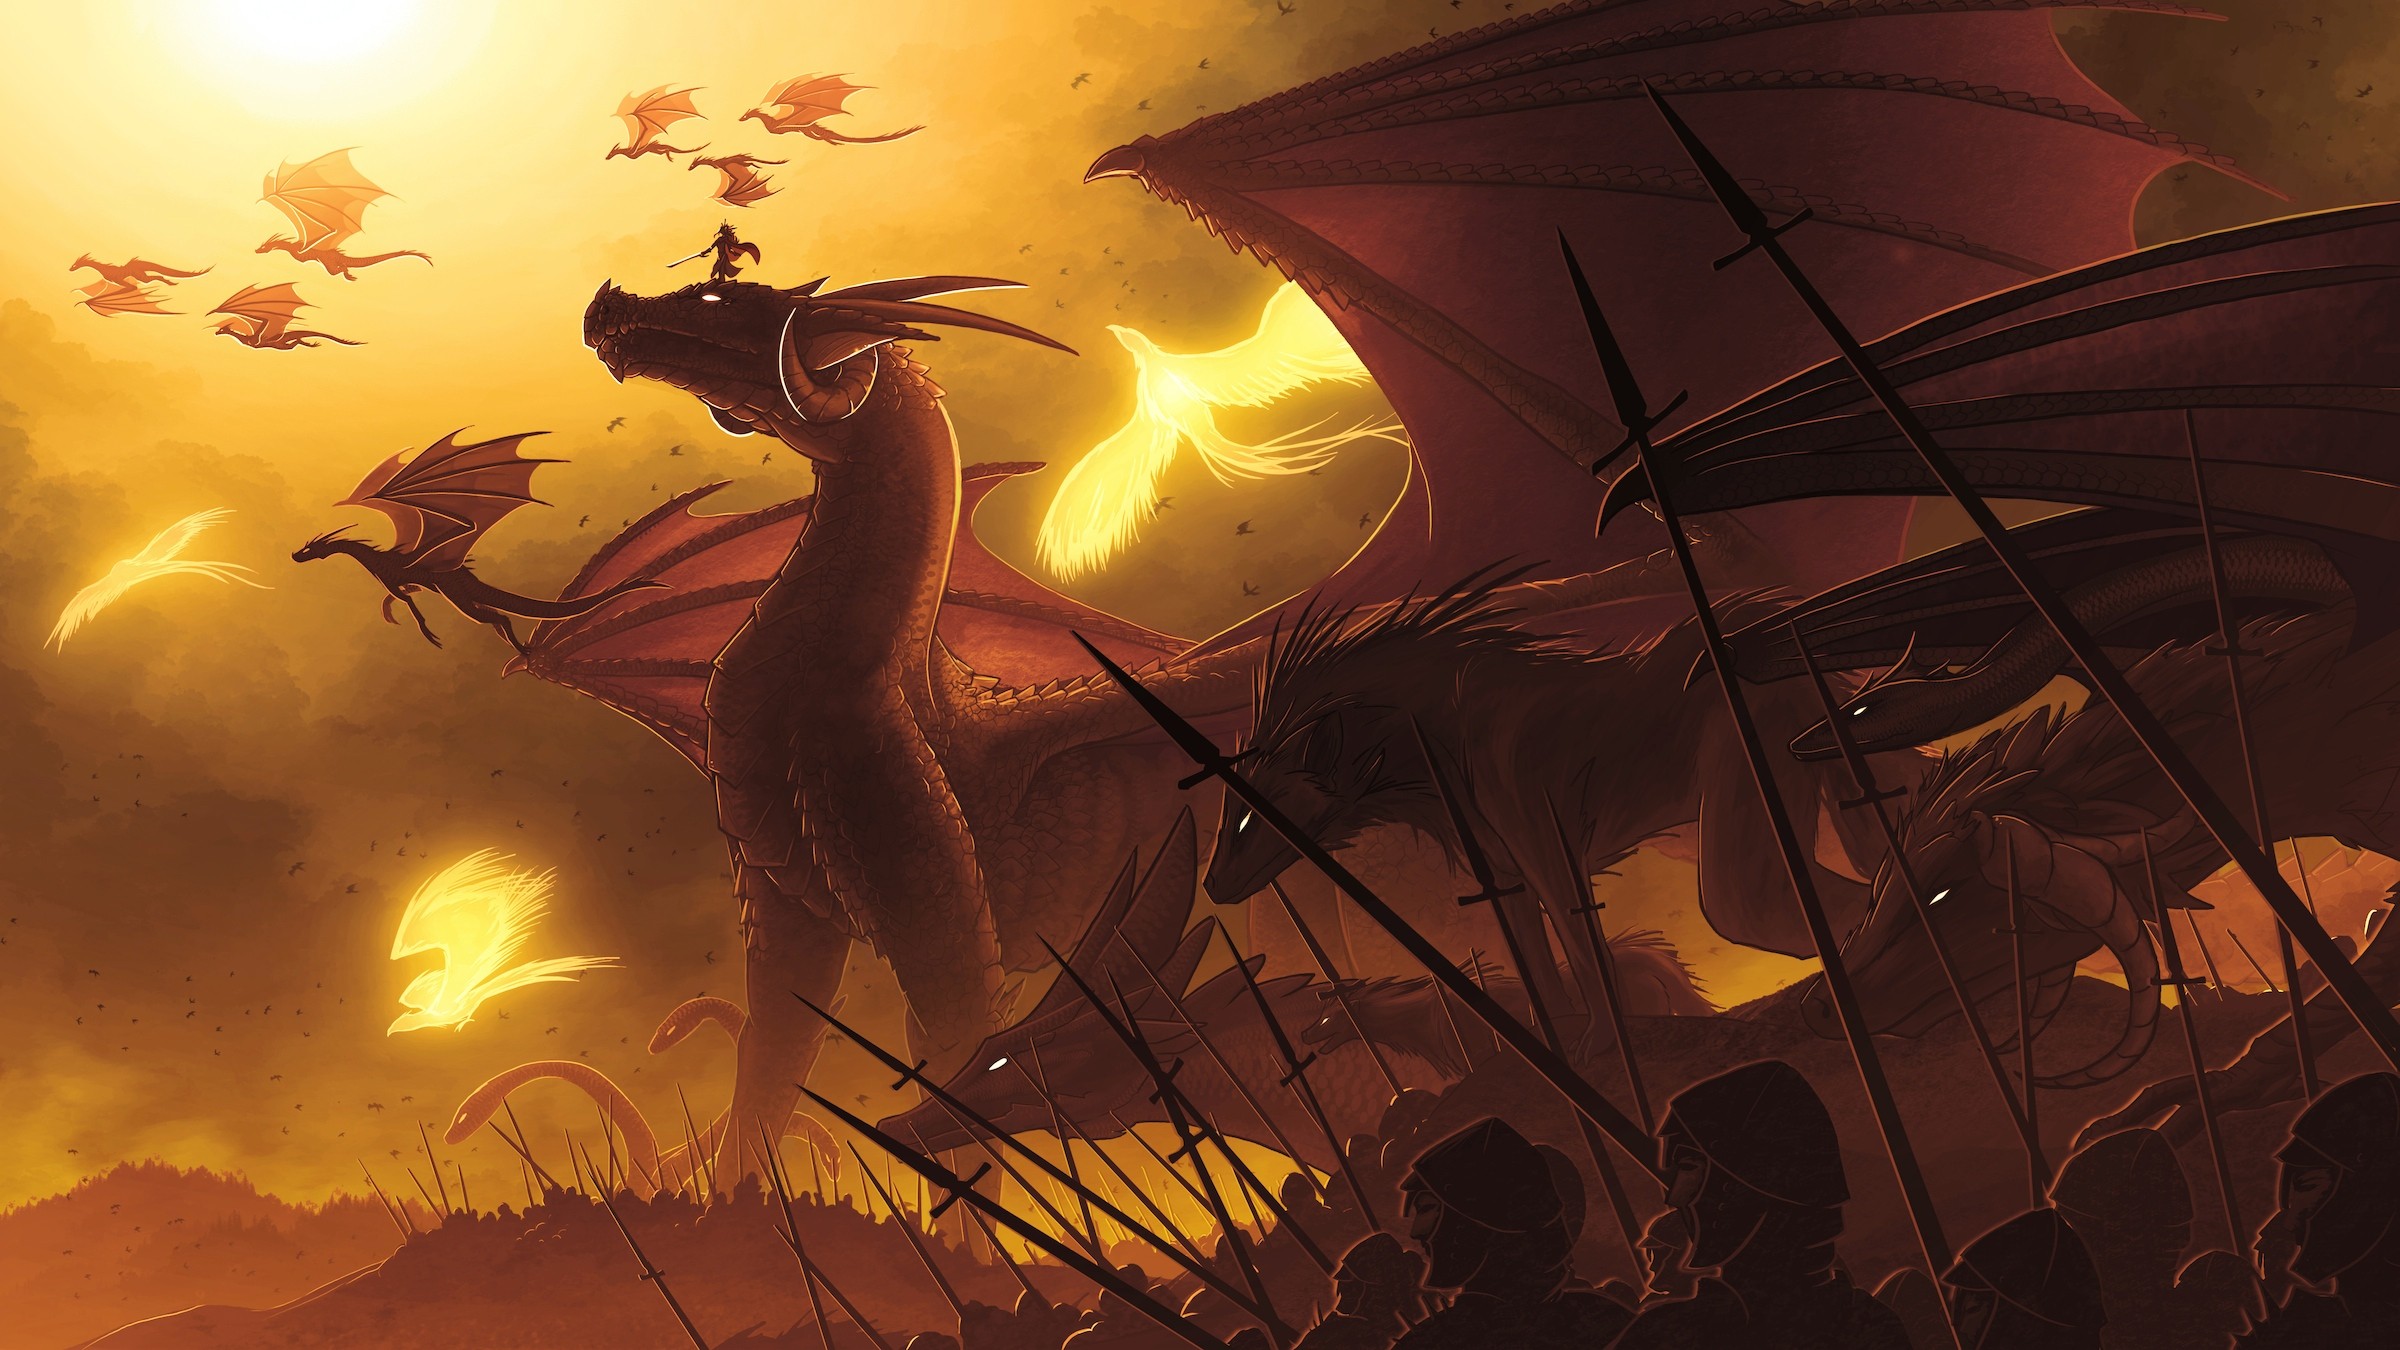 General 2400x1350 digital art fantasy art dragon wings phoenix flying soldier spear war creature DeviantArt